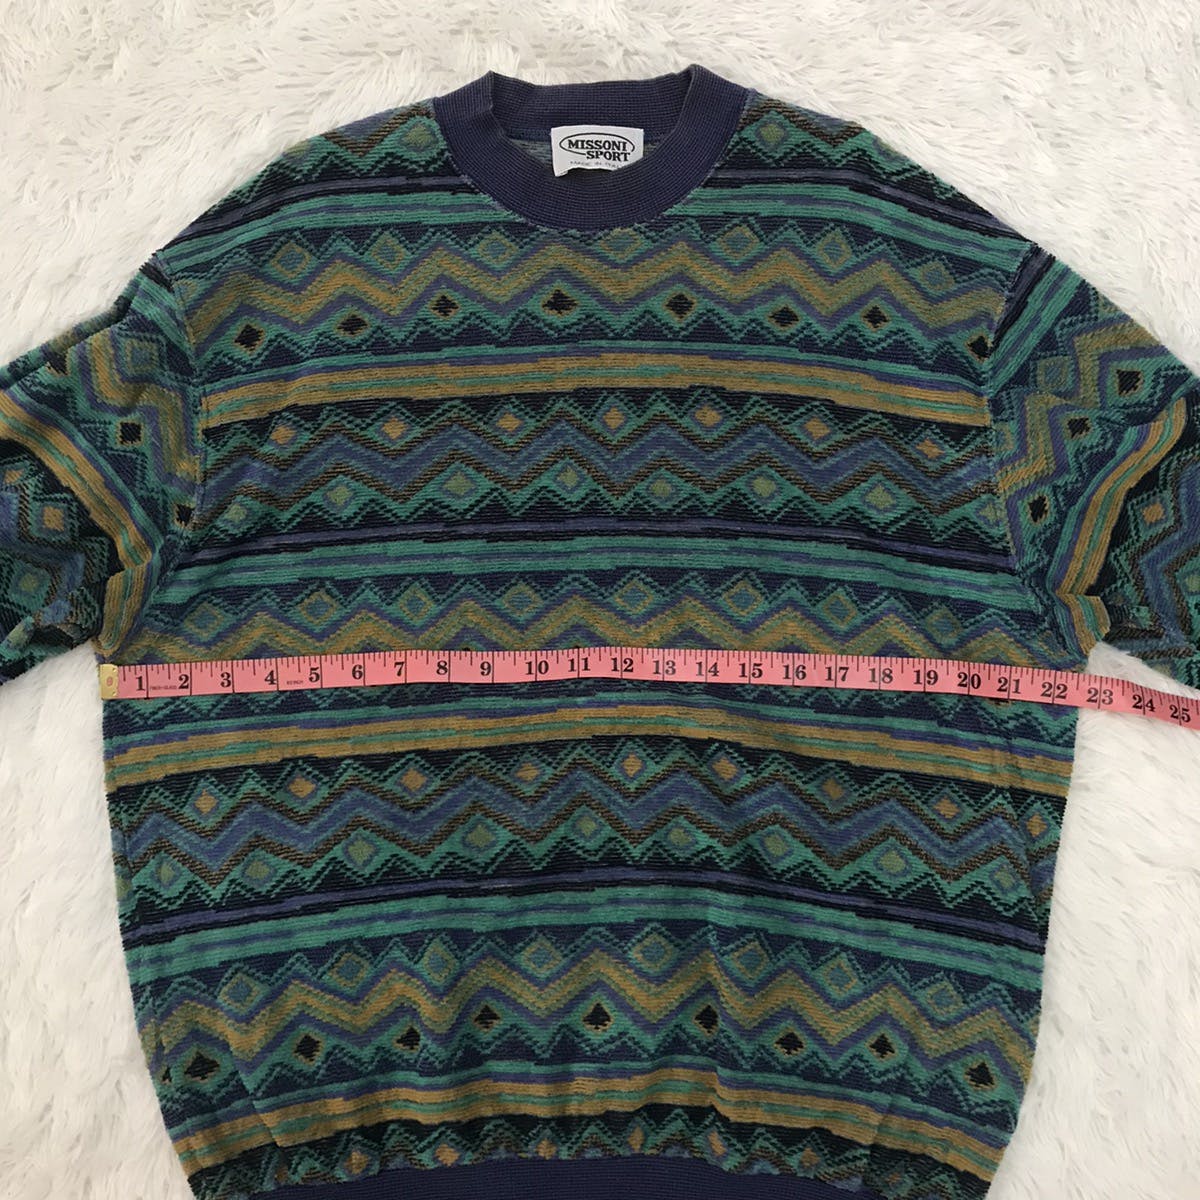 Missoni Sport Cozy Printed Sweater/Sweatshirt Jumper - 15